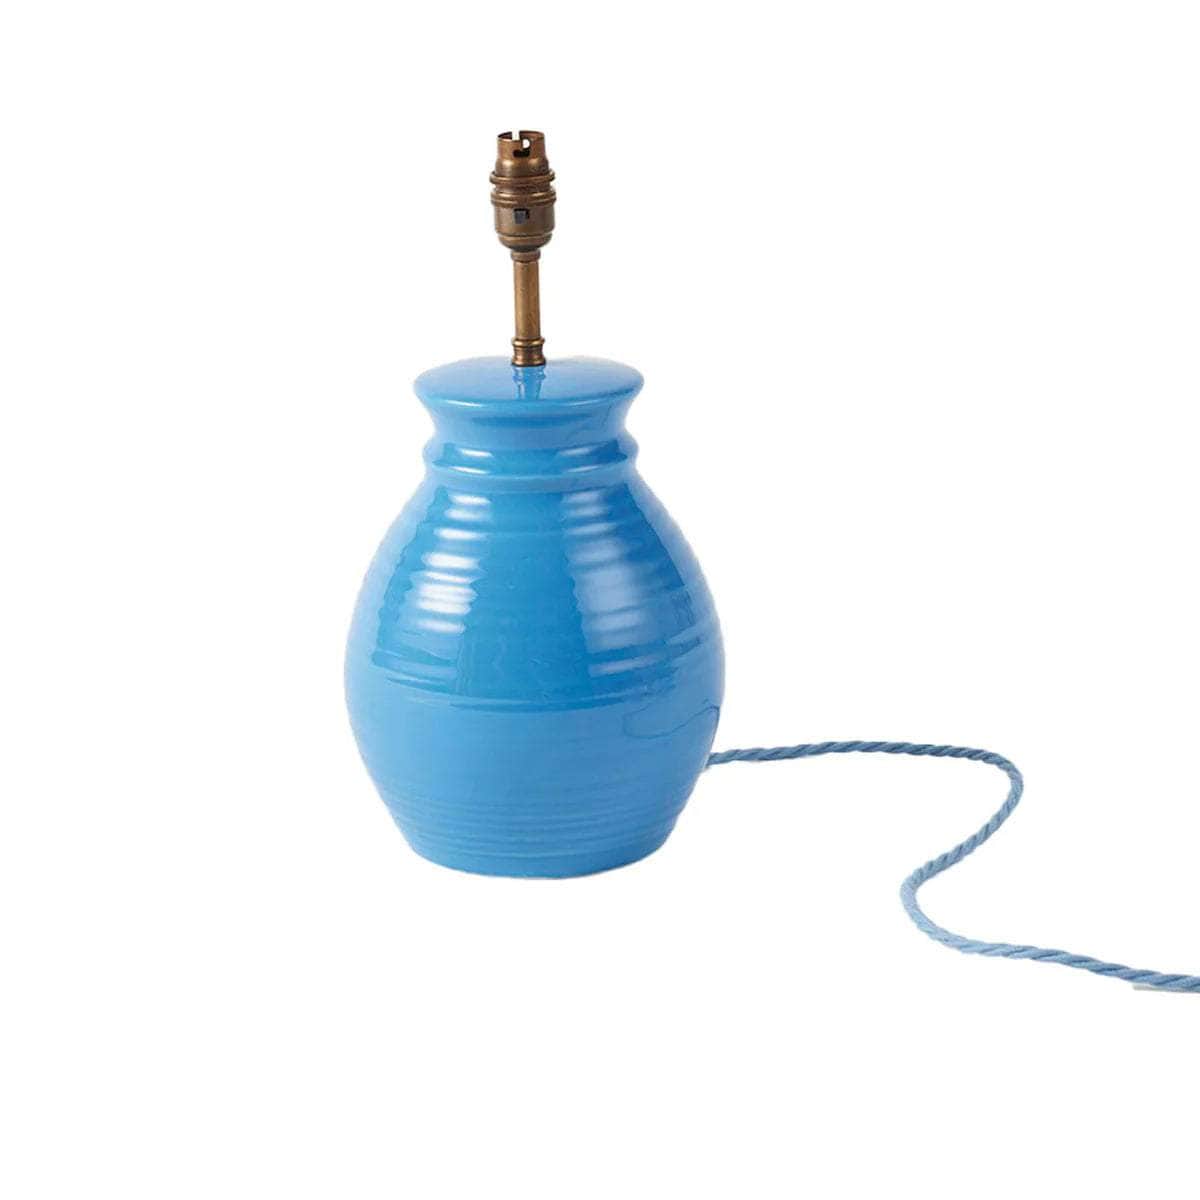 Lampbase Ceramic Honey Pot Blue